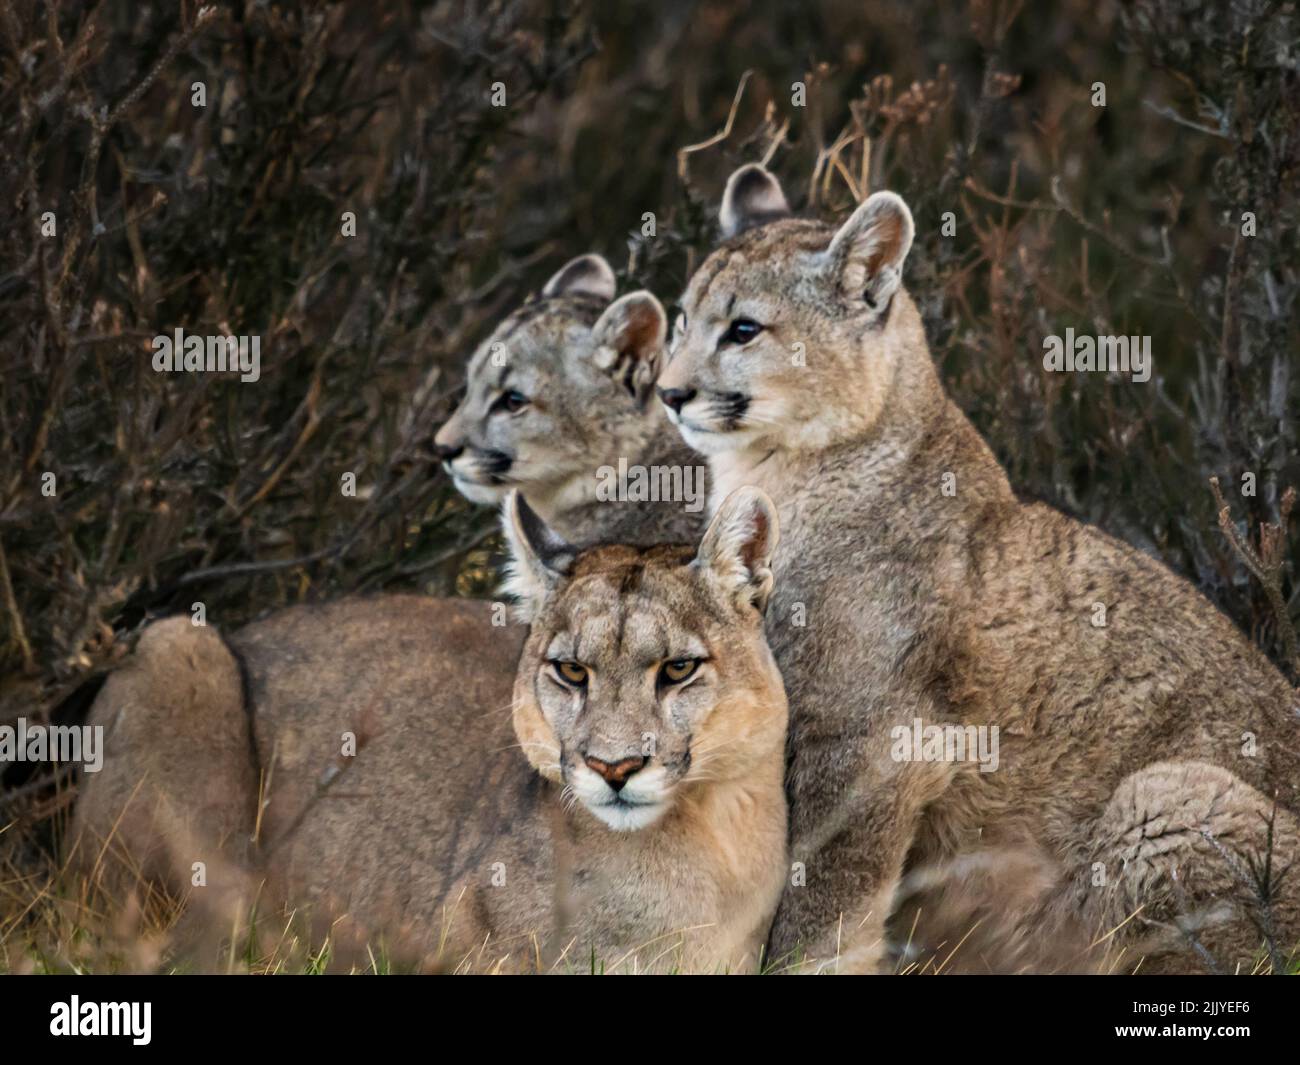 barato mañana balsa Pumas salvajes fotografías e imágenes de alta resolución - Alamy